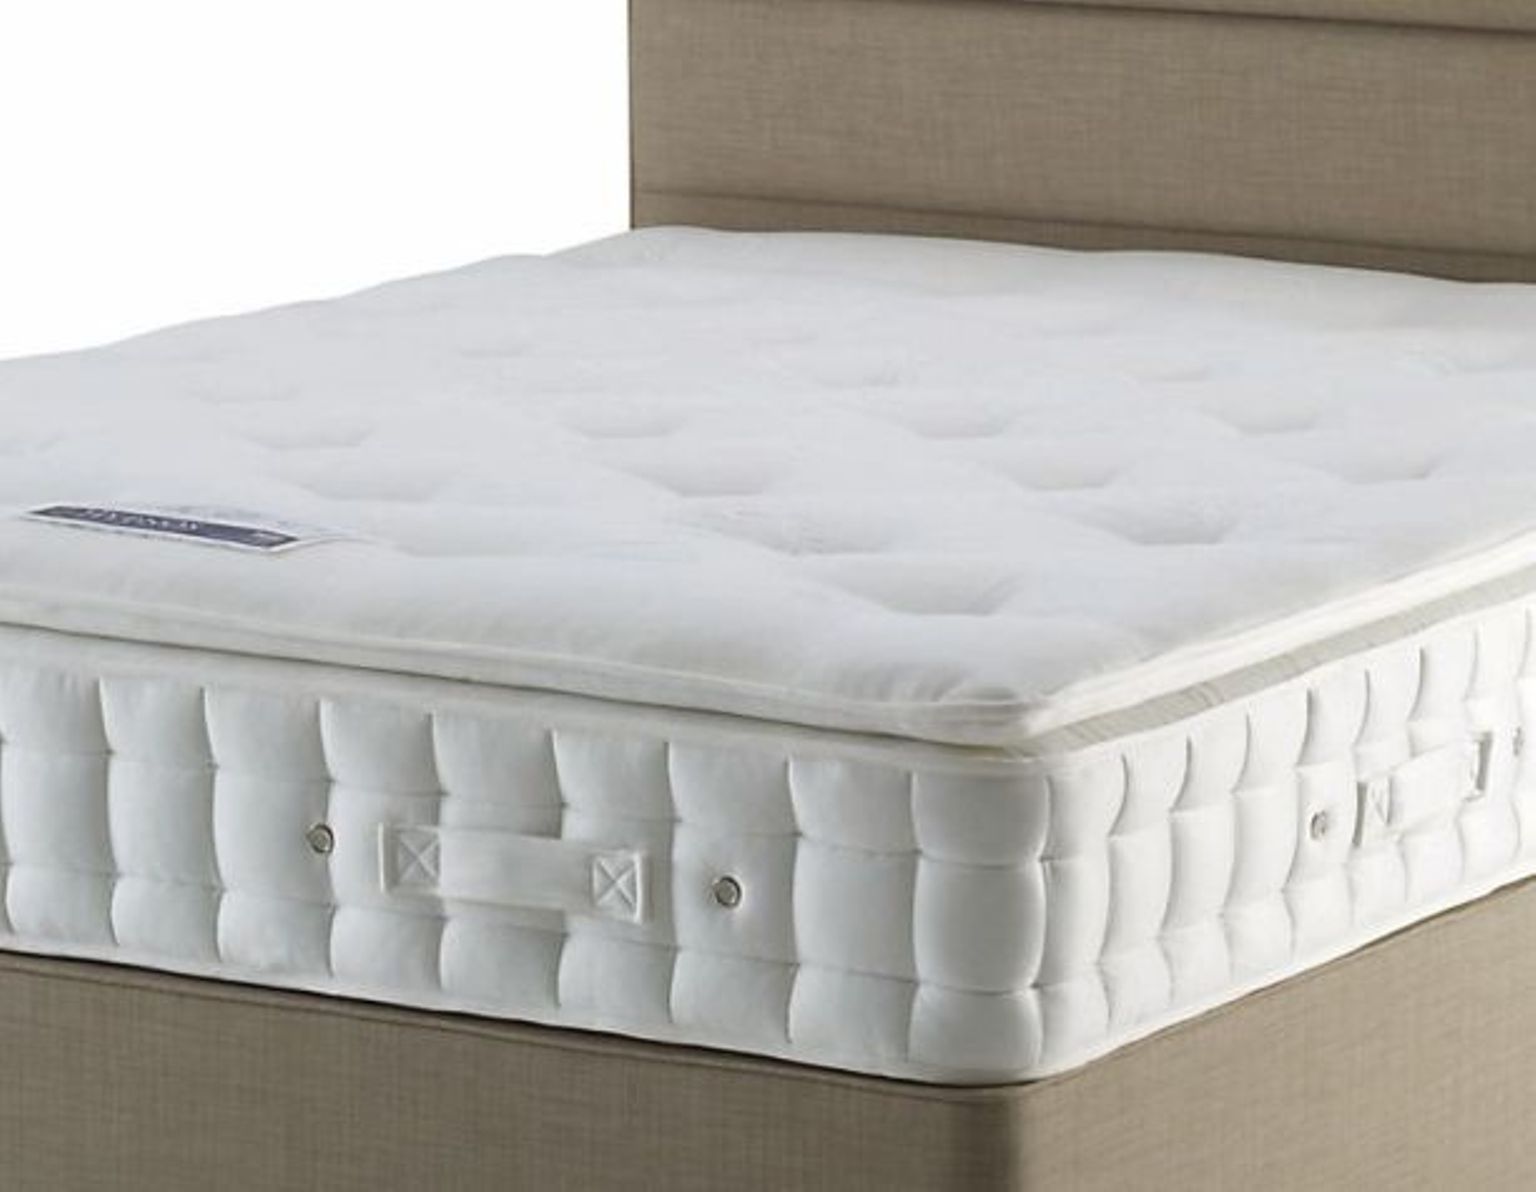 hypnos mattresses prices